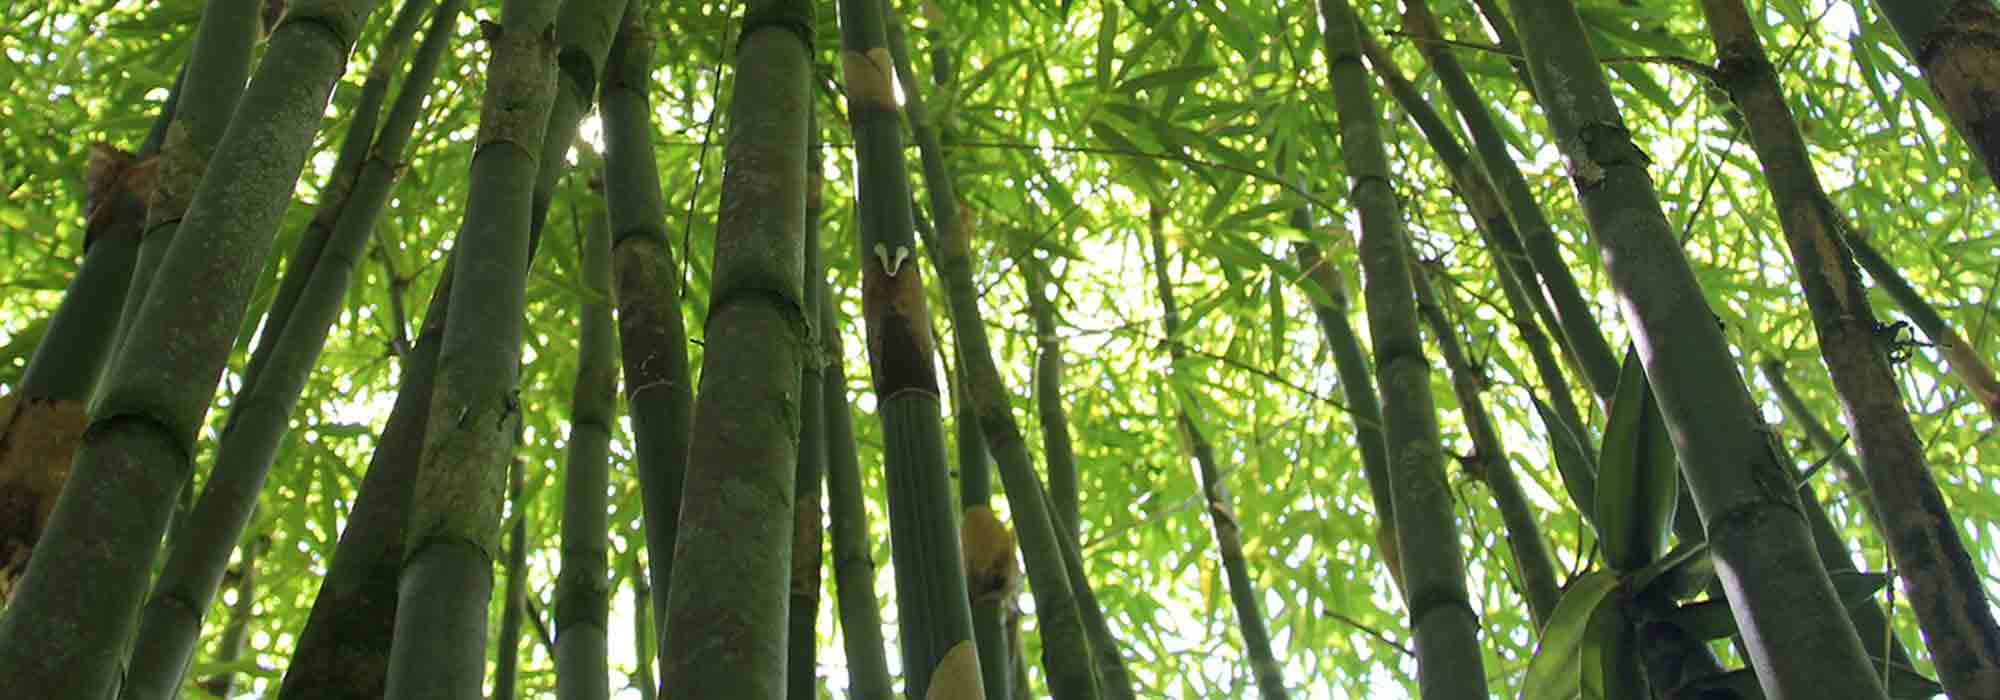 6 bambous traçants